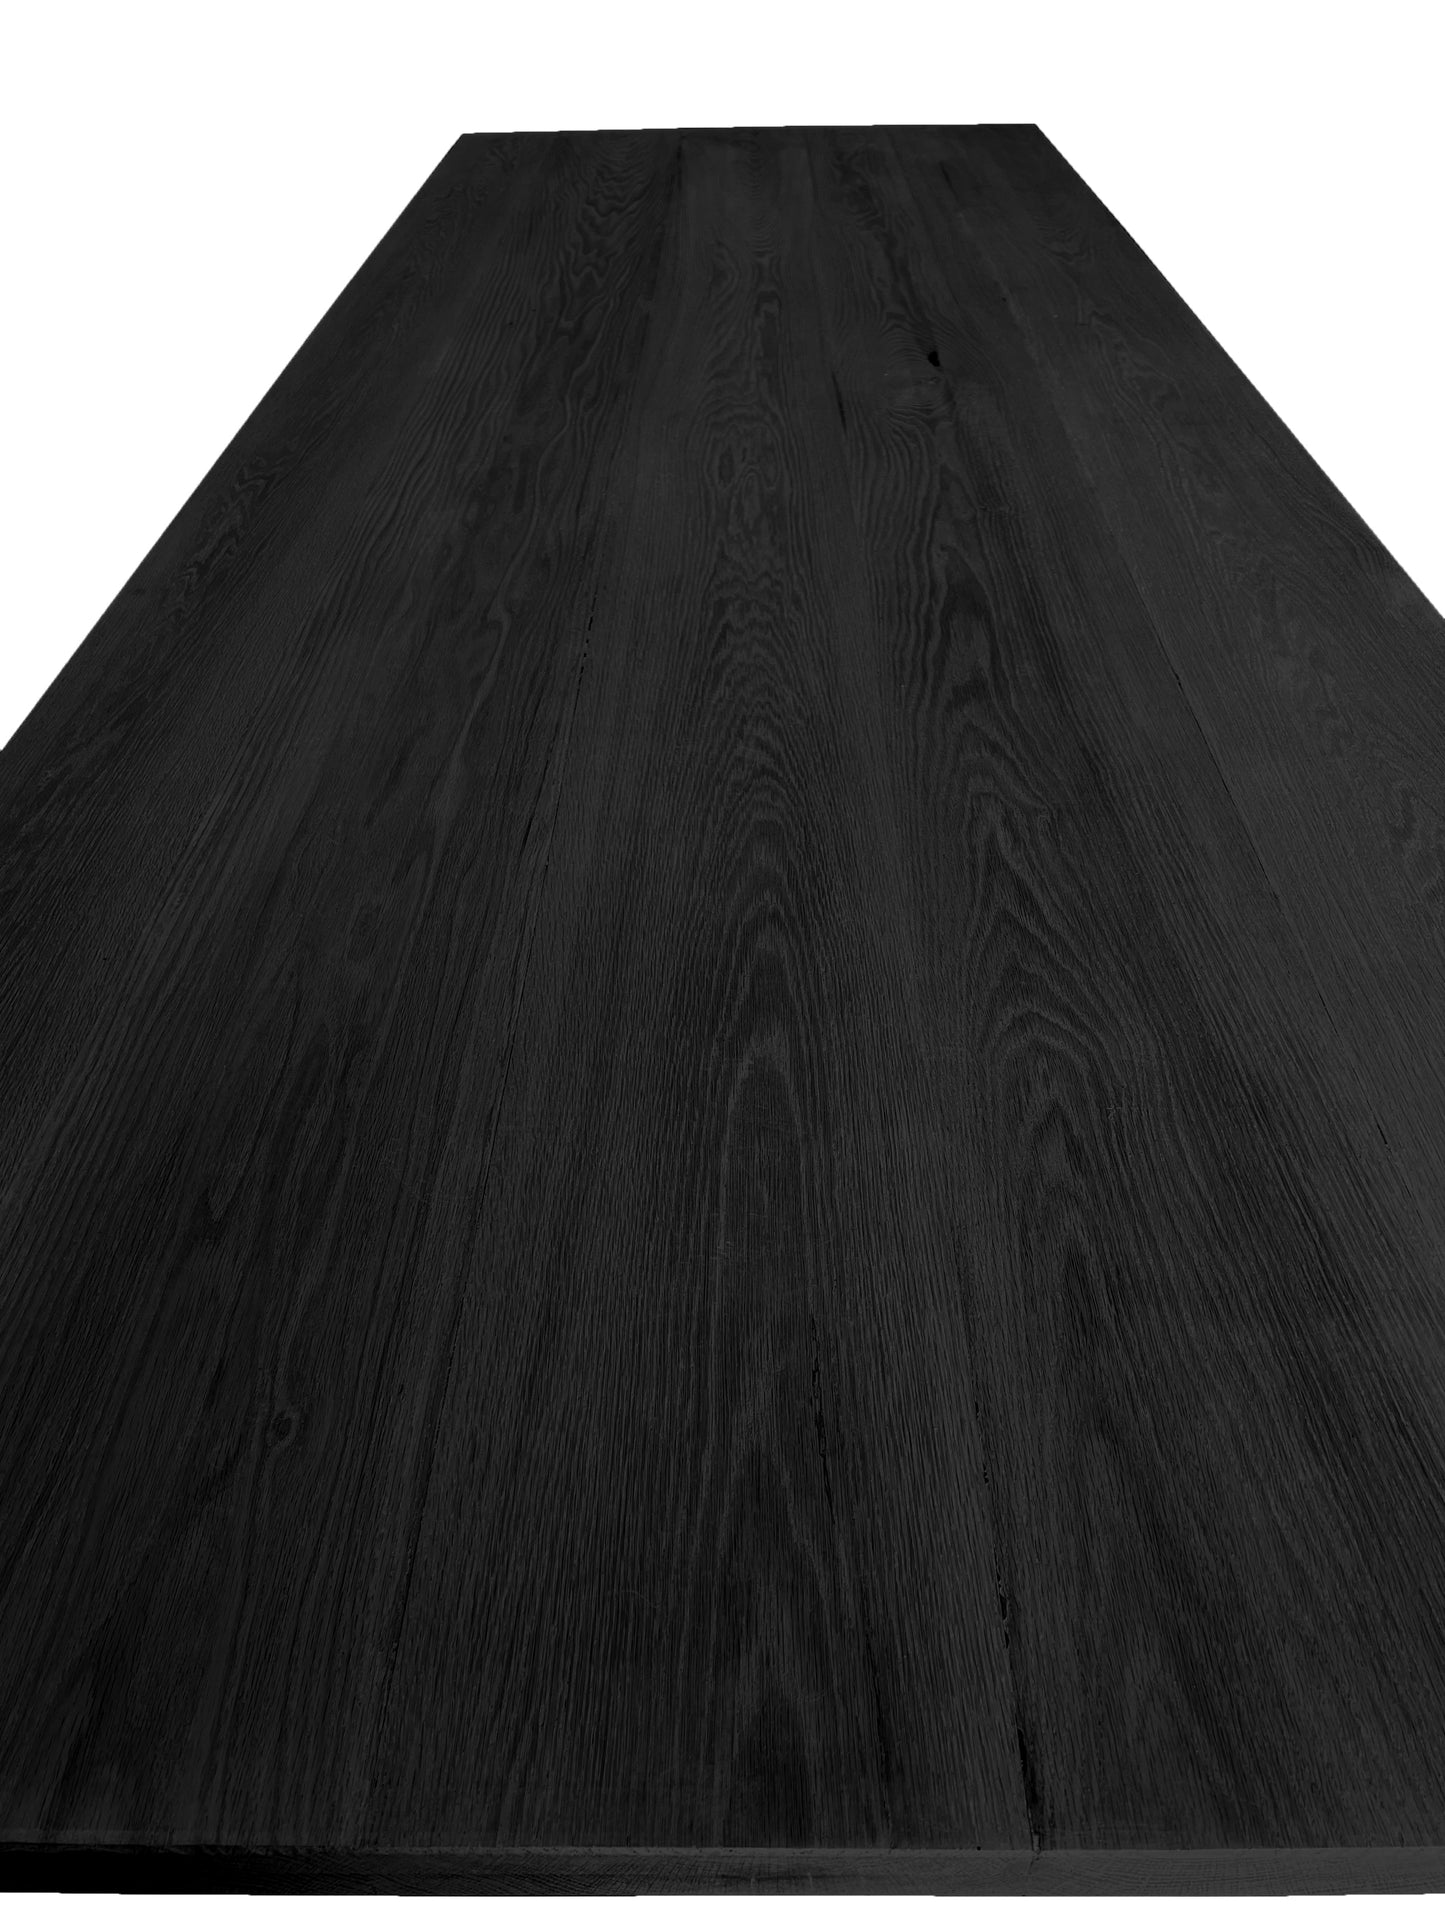 Frais 11- Piece White Oak High Back Black Conference Set